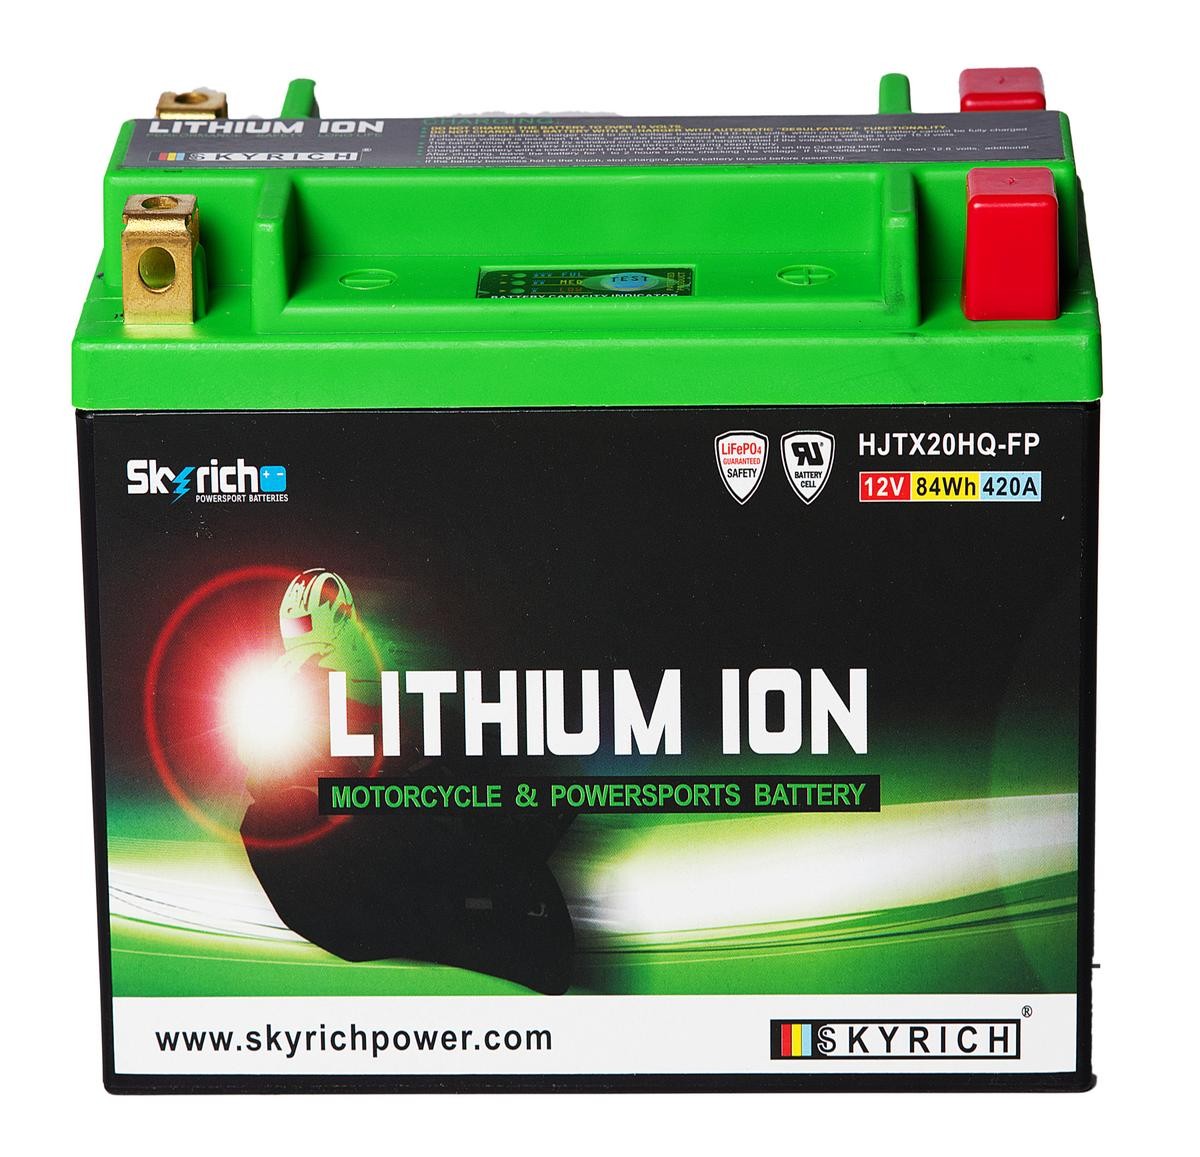 CAGIVA NAVIGATOR Batterie 12V 7Ah 420A N Li-Ionen-Batterie SKYRICH LITHIUM ION HJTX20HQ-FP